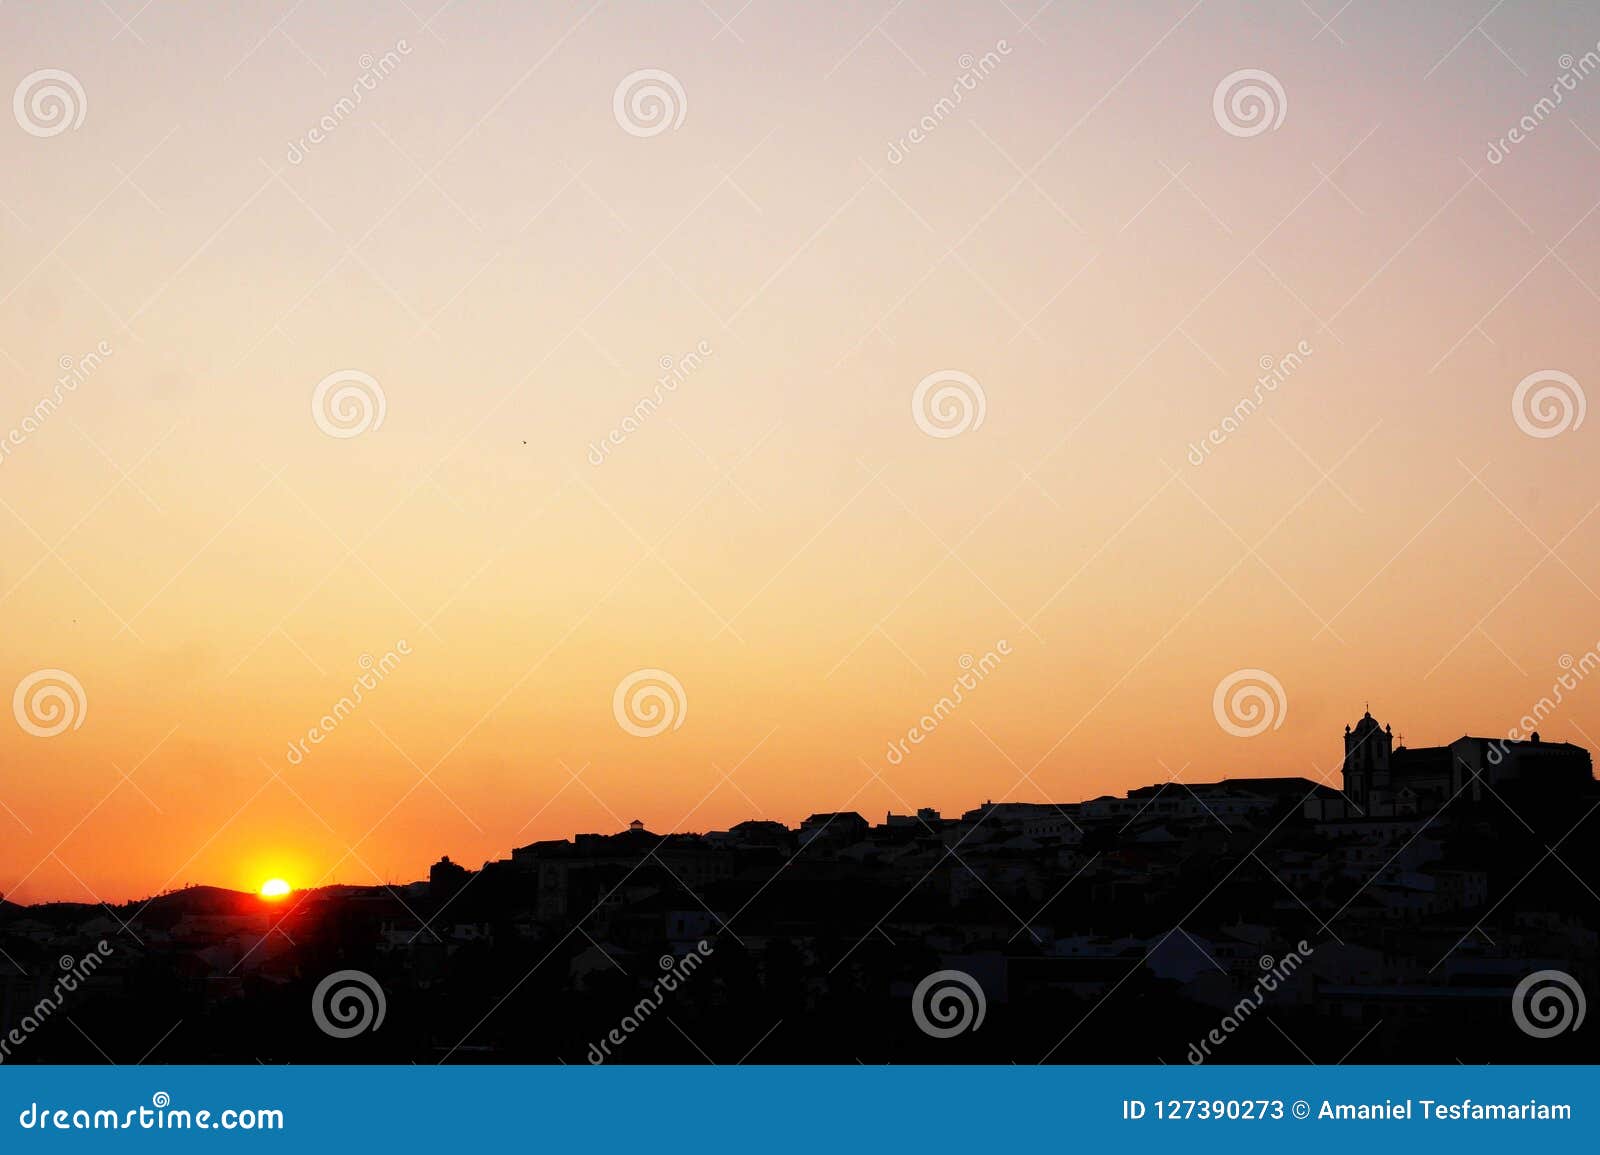 sunset city siluette